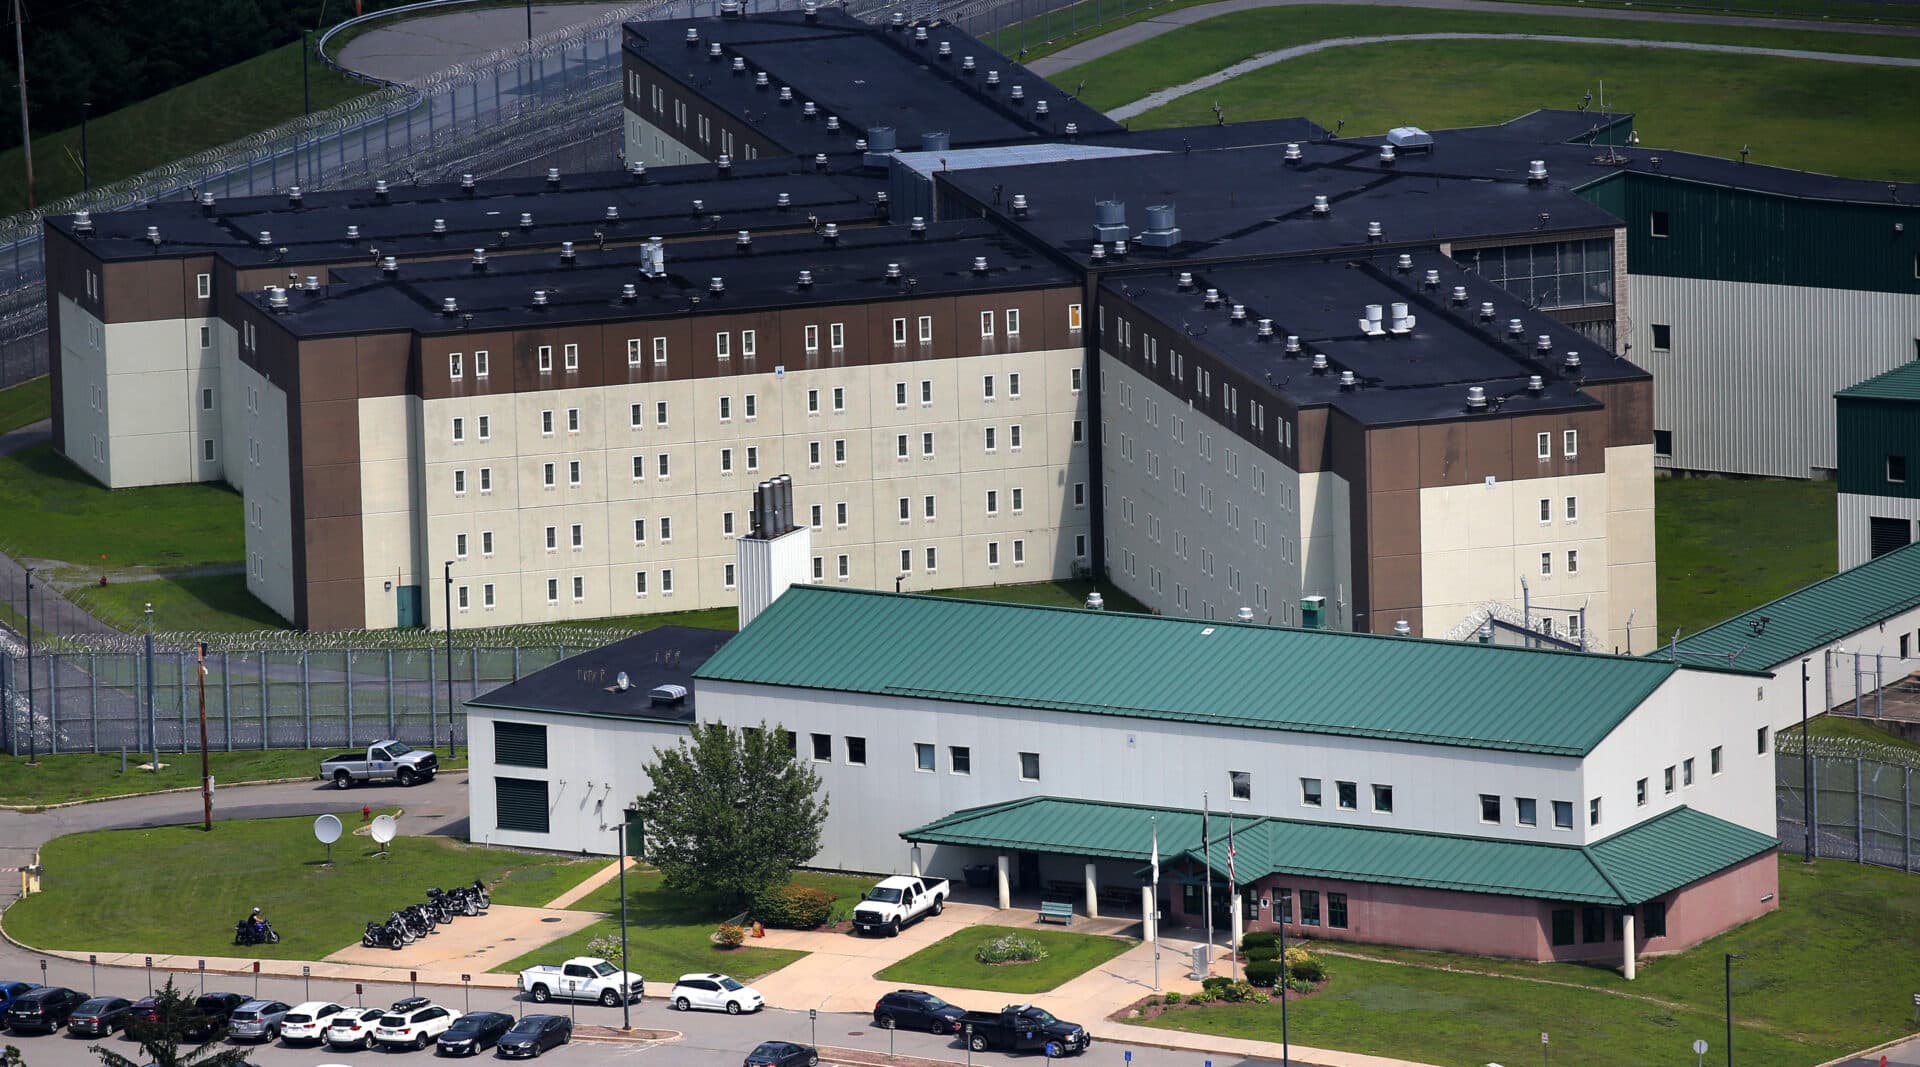 A view of the front entrance at the Souza-Baranowski Correctional Center, a maximum security prison, in Lancaster. (David L Ryan/Boston Globe)